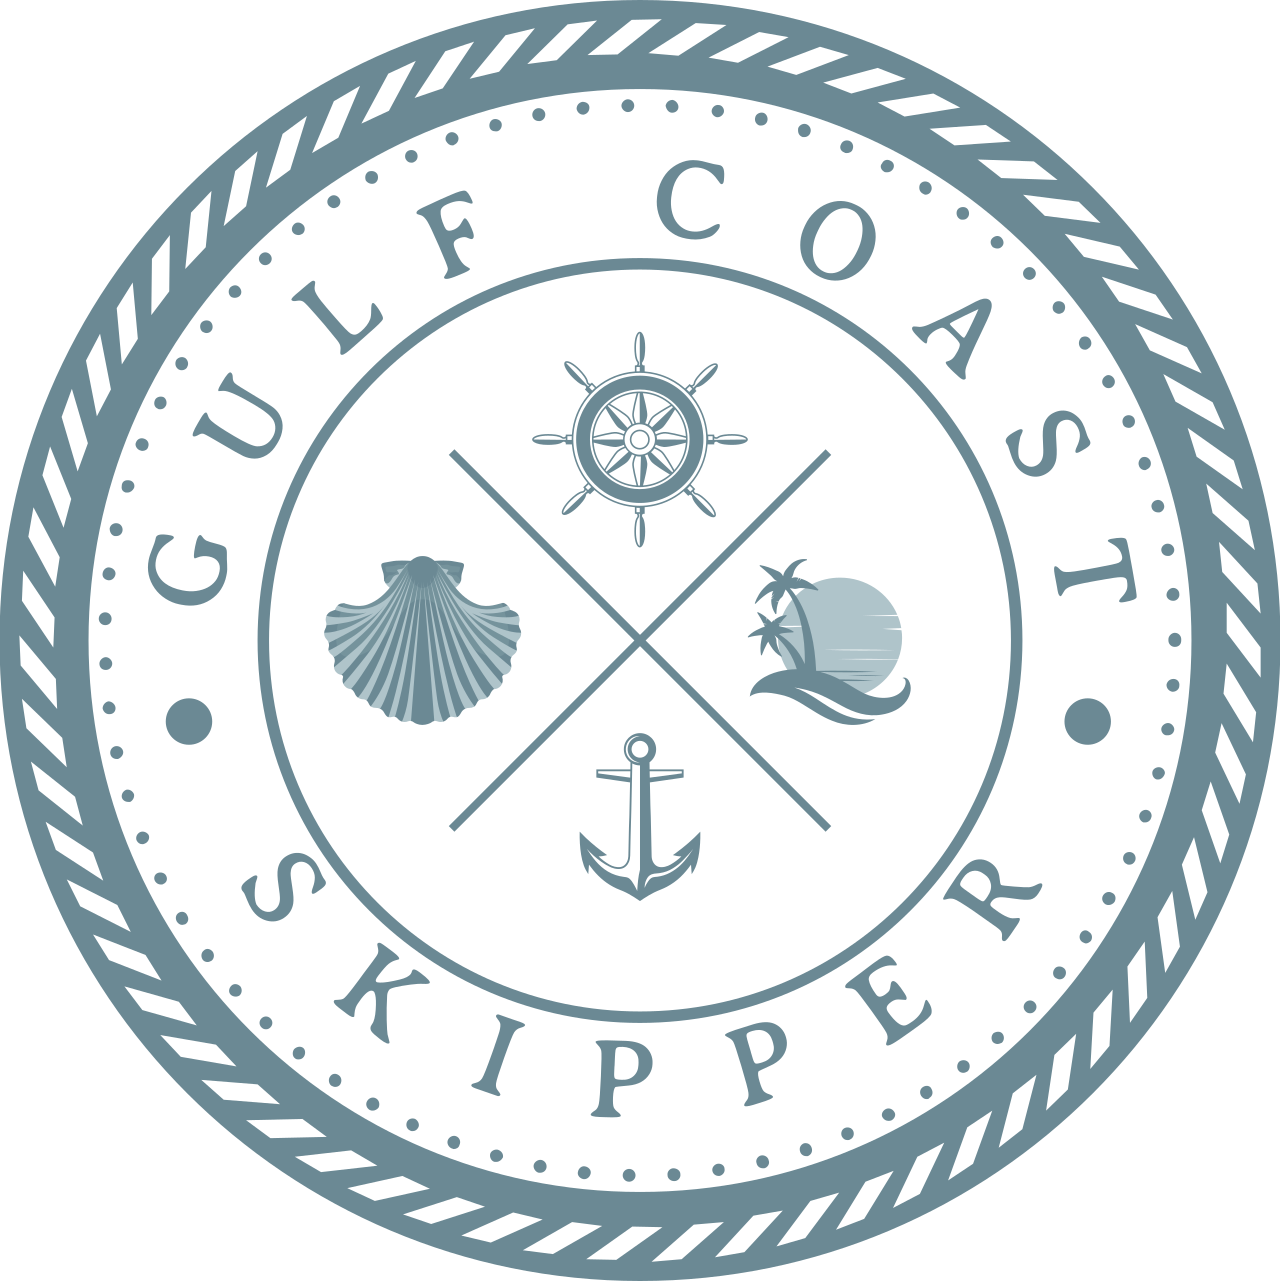 Gulf Coast Skipper's logo